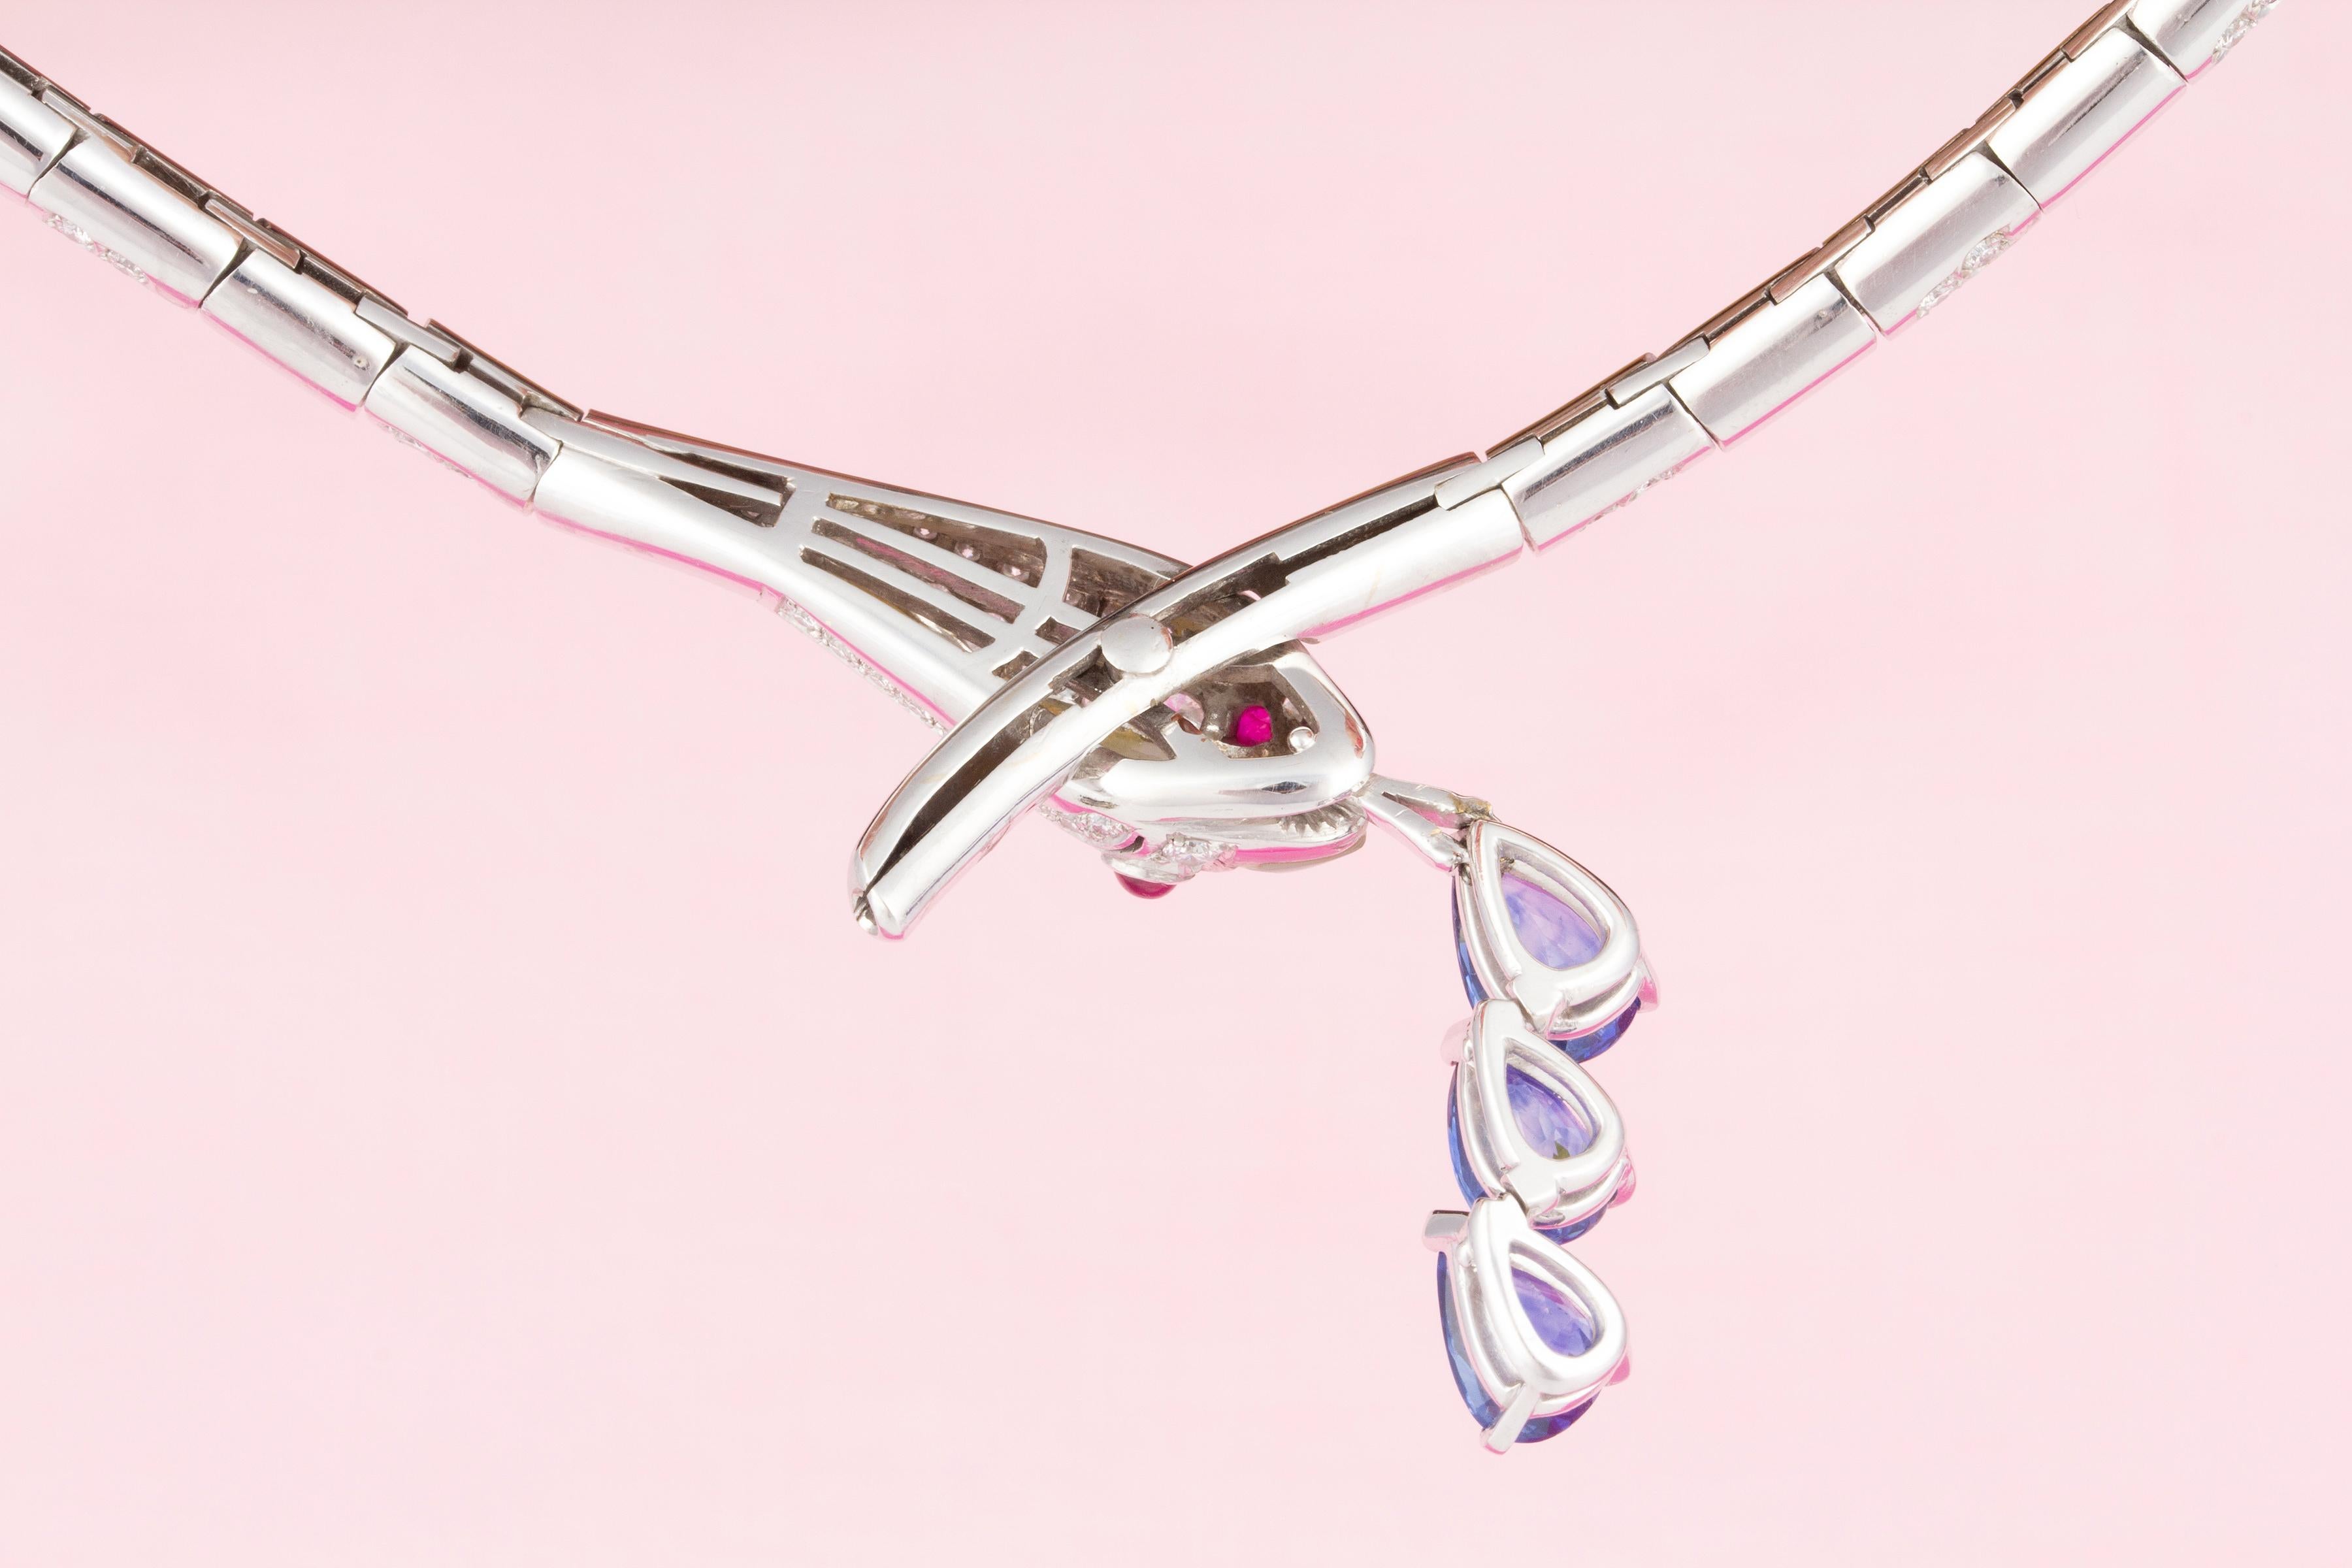 cartier diamond snake necklace